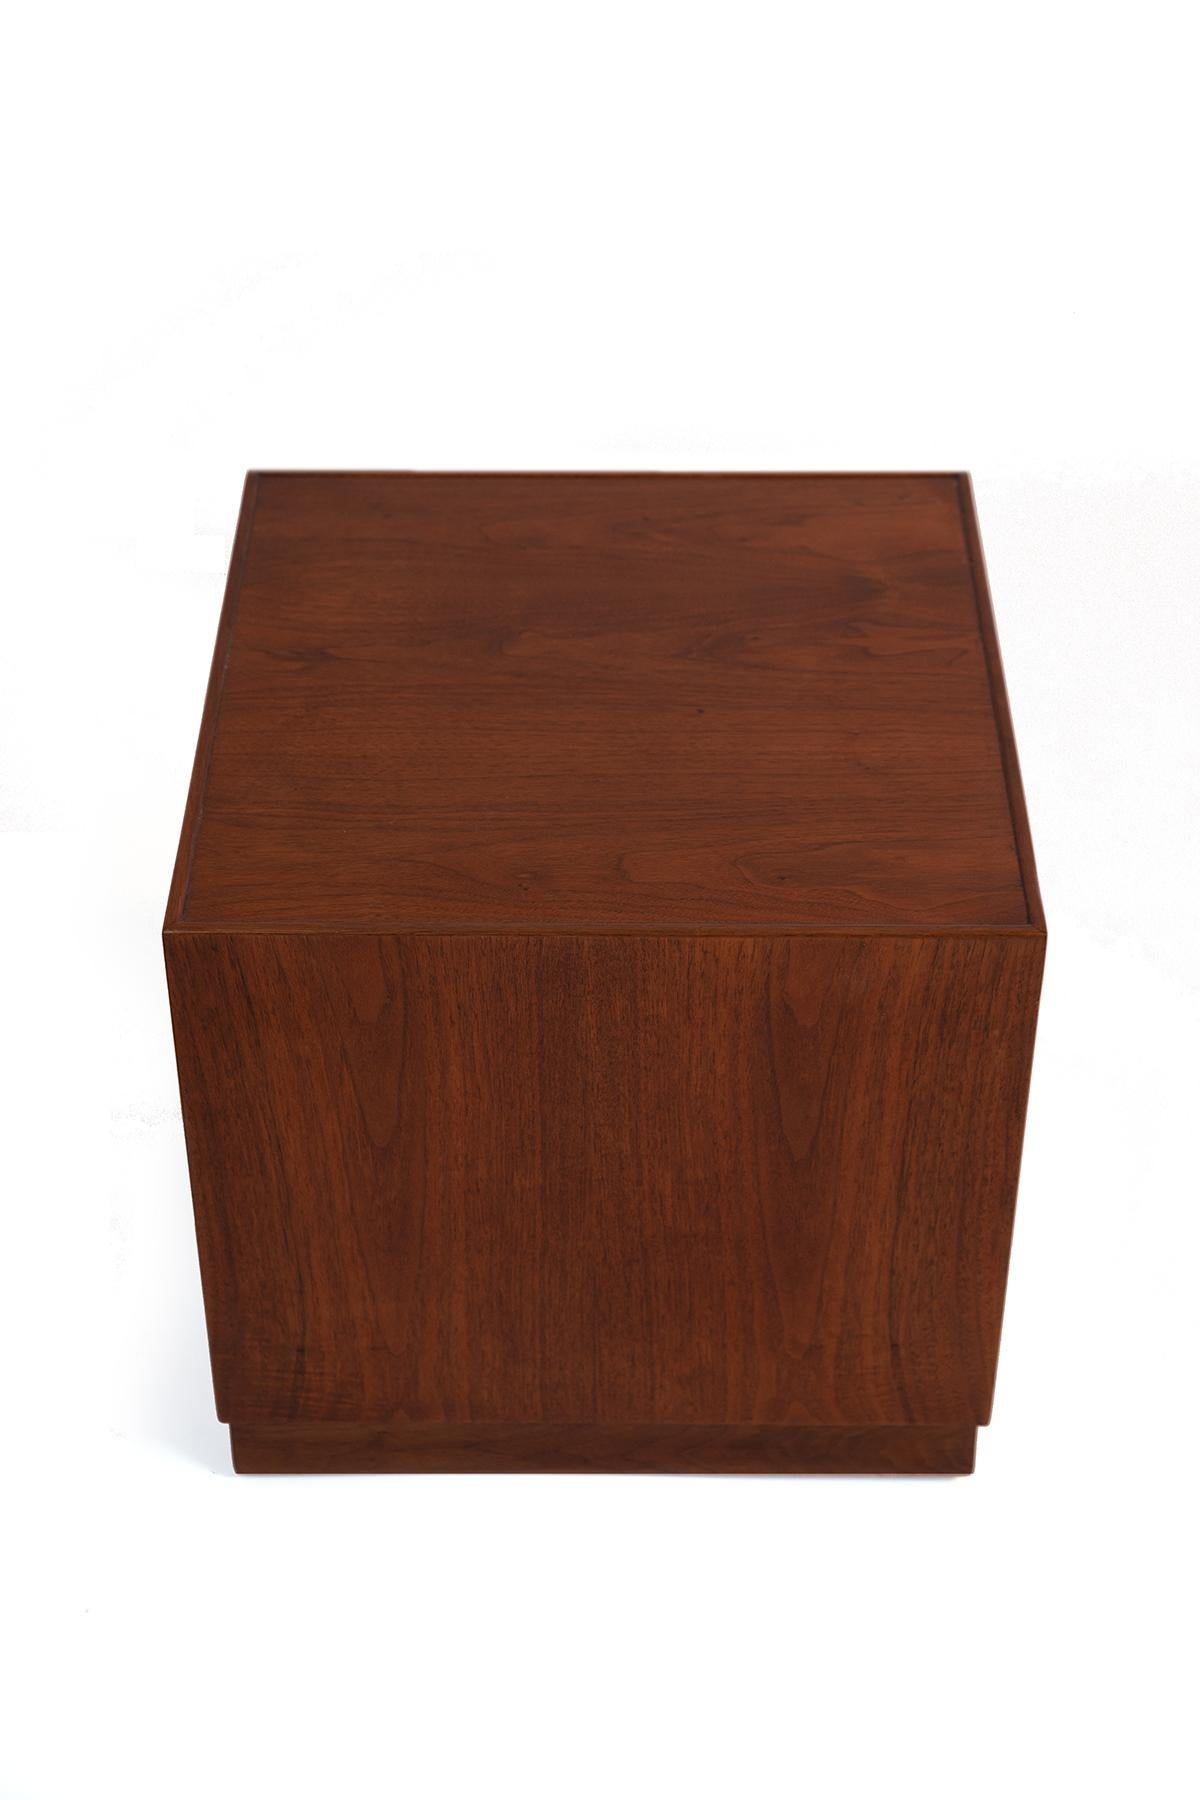 Mid-Century Modern Adrian Pearsall Walnut Cube Tables